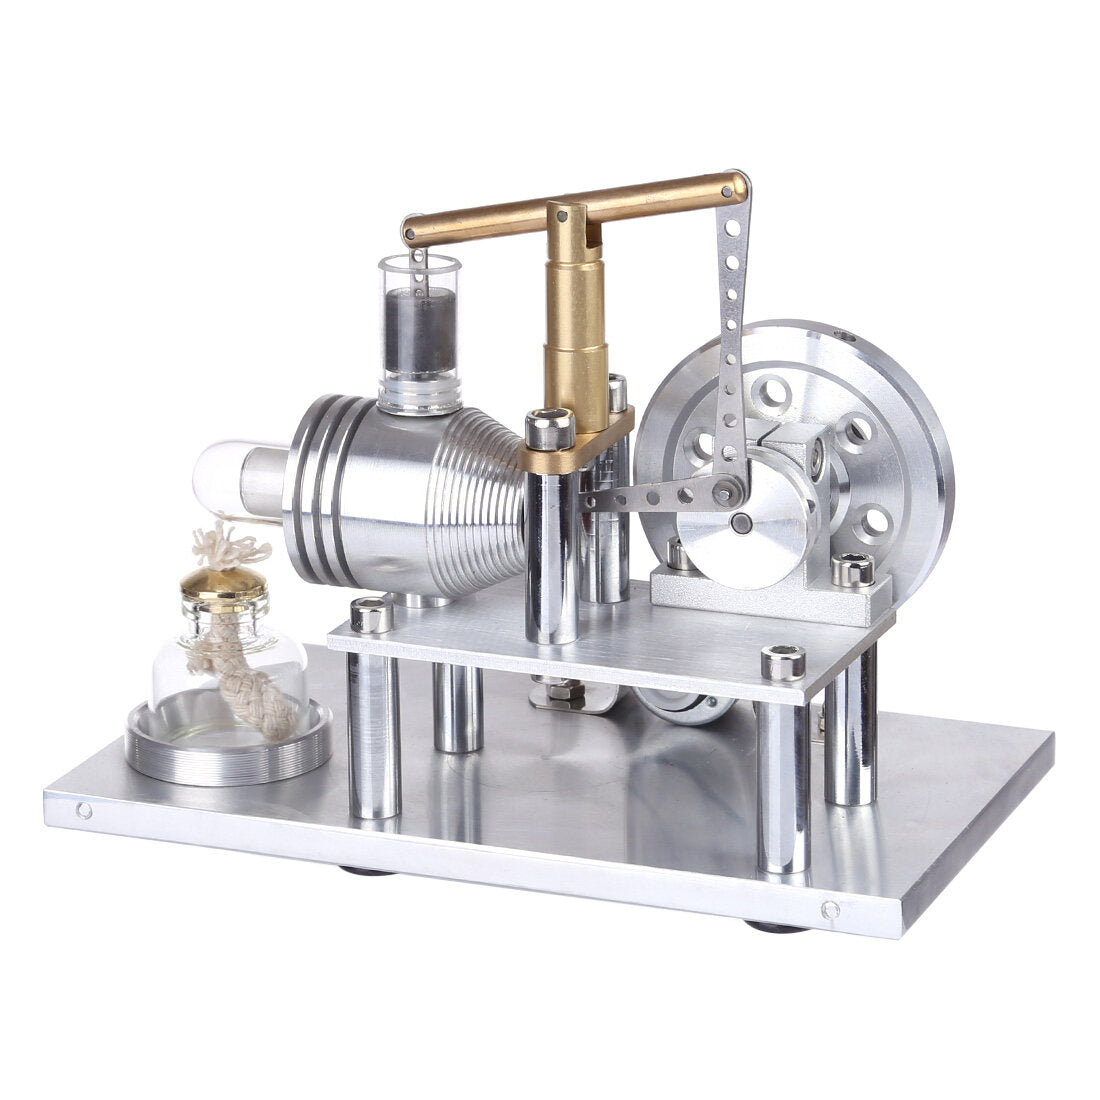 Stirling Engine Kit Hot Air Stirling Engine Electricity Generator with Colorful LED enginediyshop